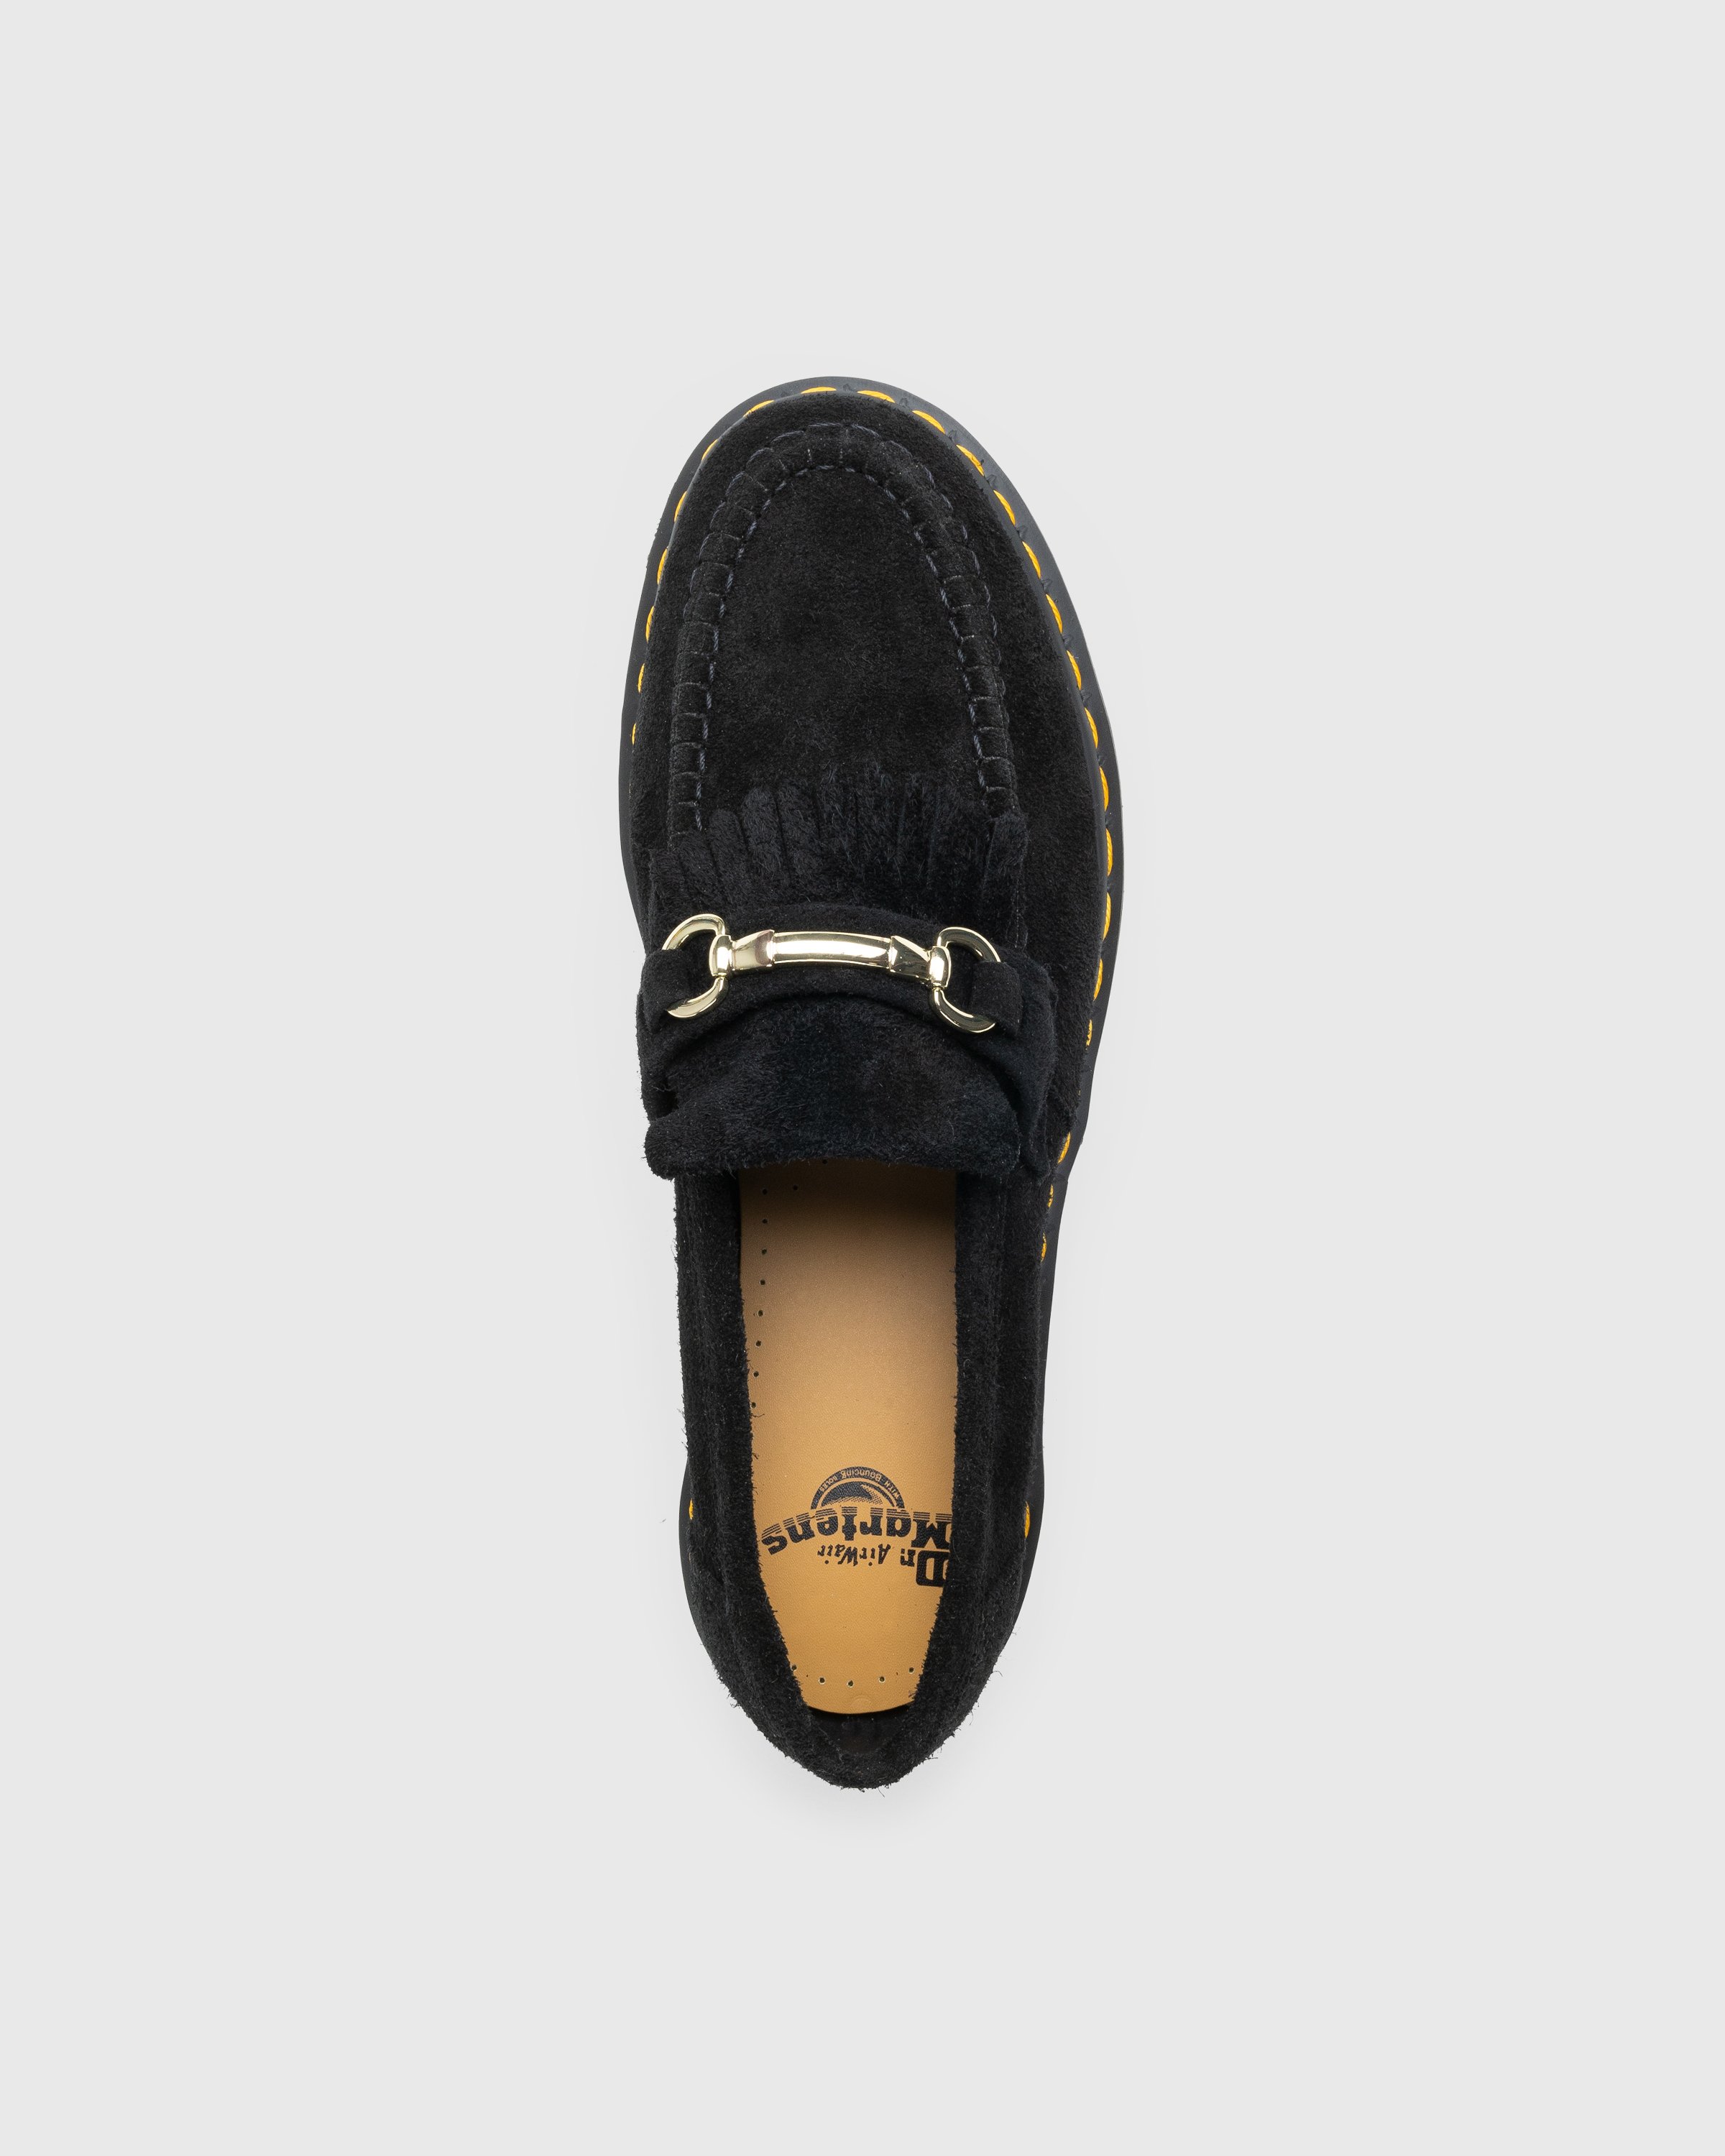 Dr. Martens - Adrian Snaffle Suede Loafers Black Desert Oasis Suede Gum Oil - Footwear - Black - Image 5